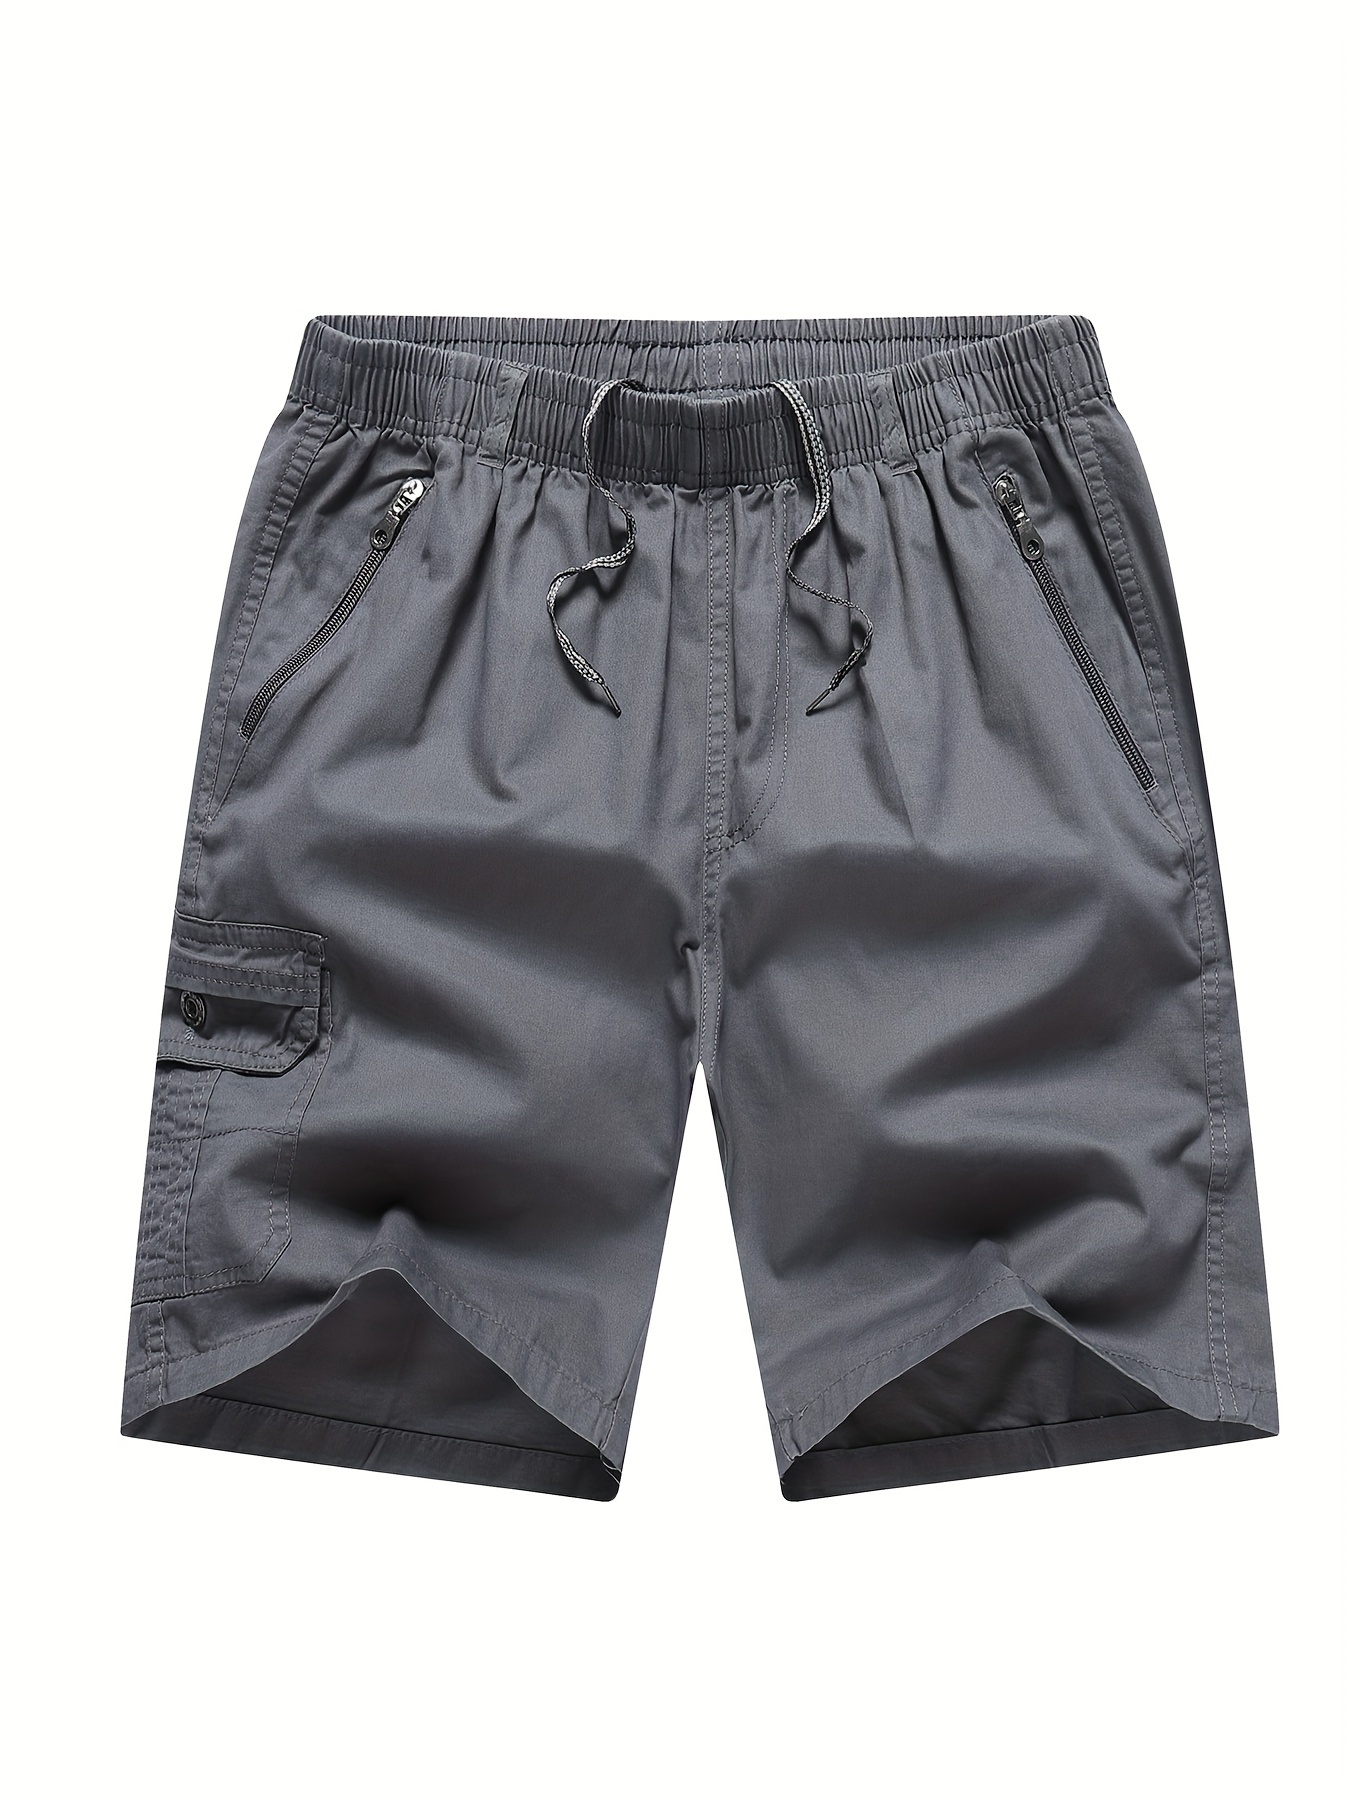 Bagilaanoe Mens Casual Cargo Shorts Elasticated Waist Half Pant Work  Trousers Sport Trunks